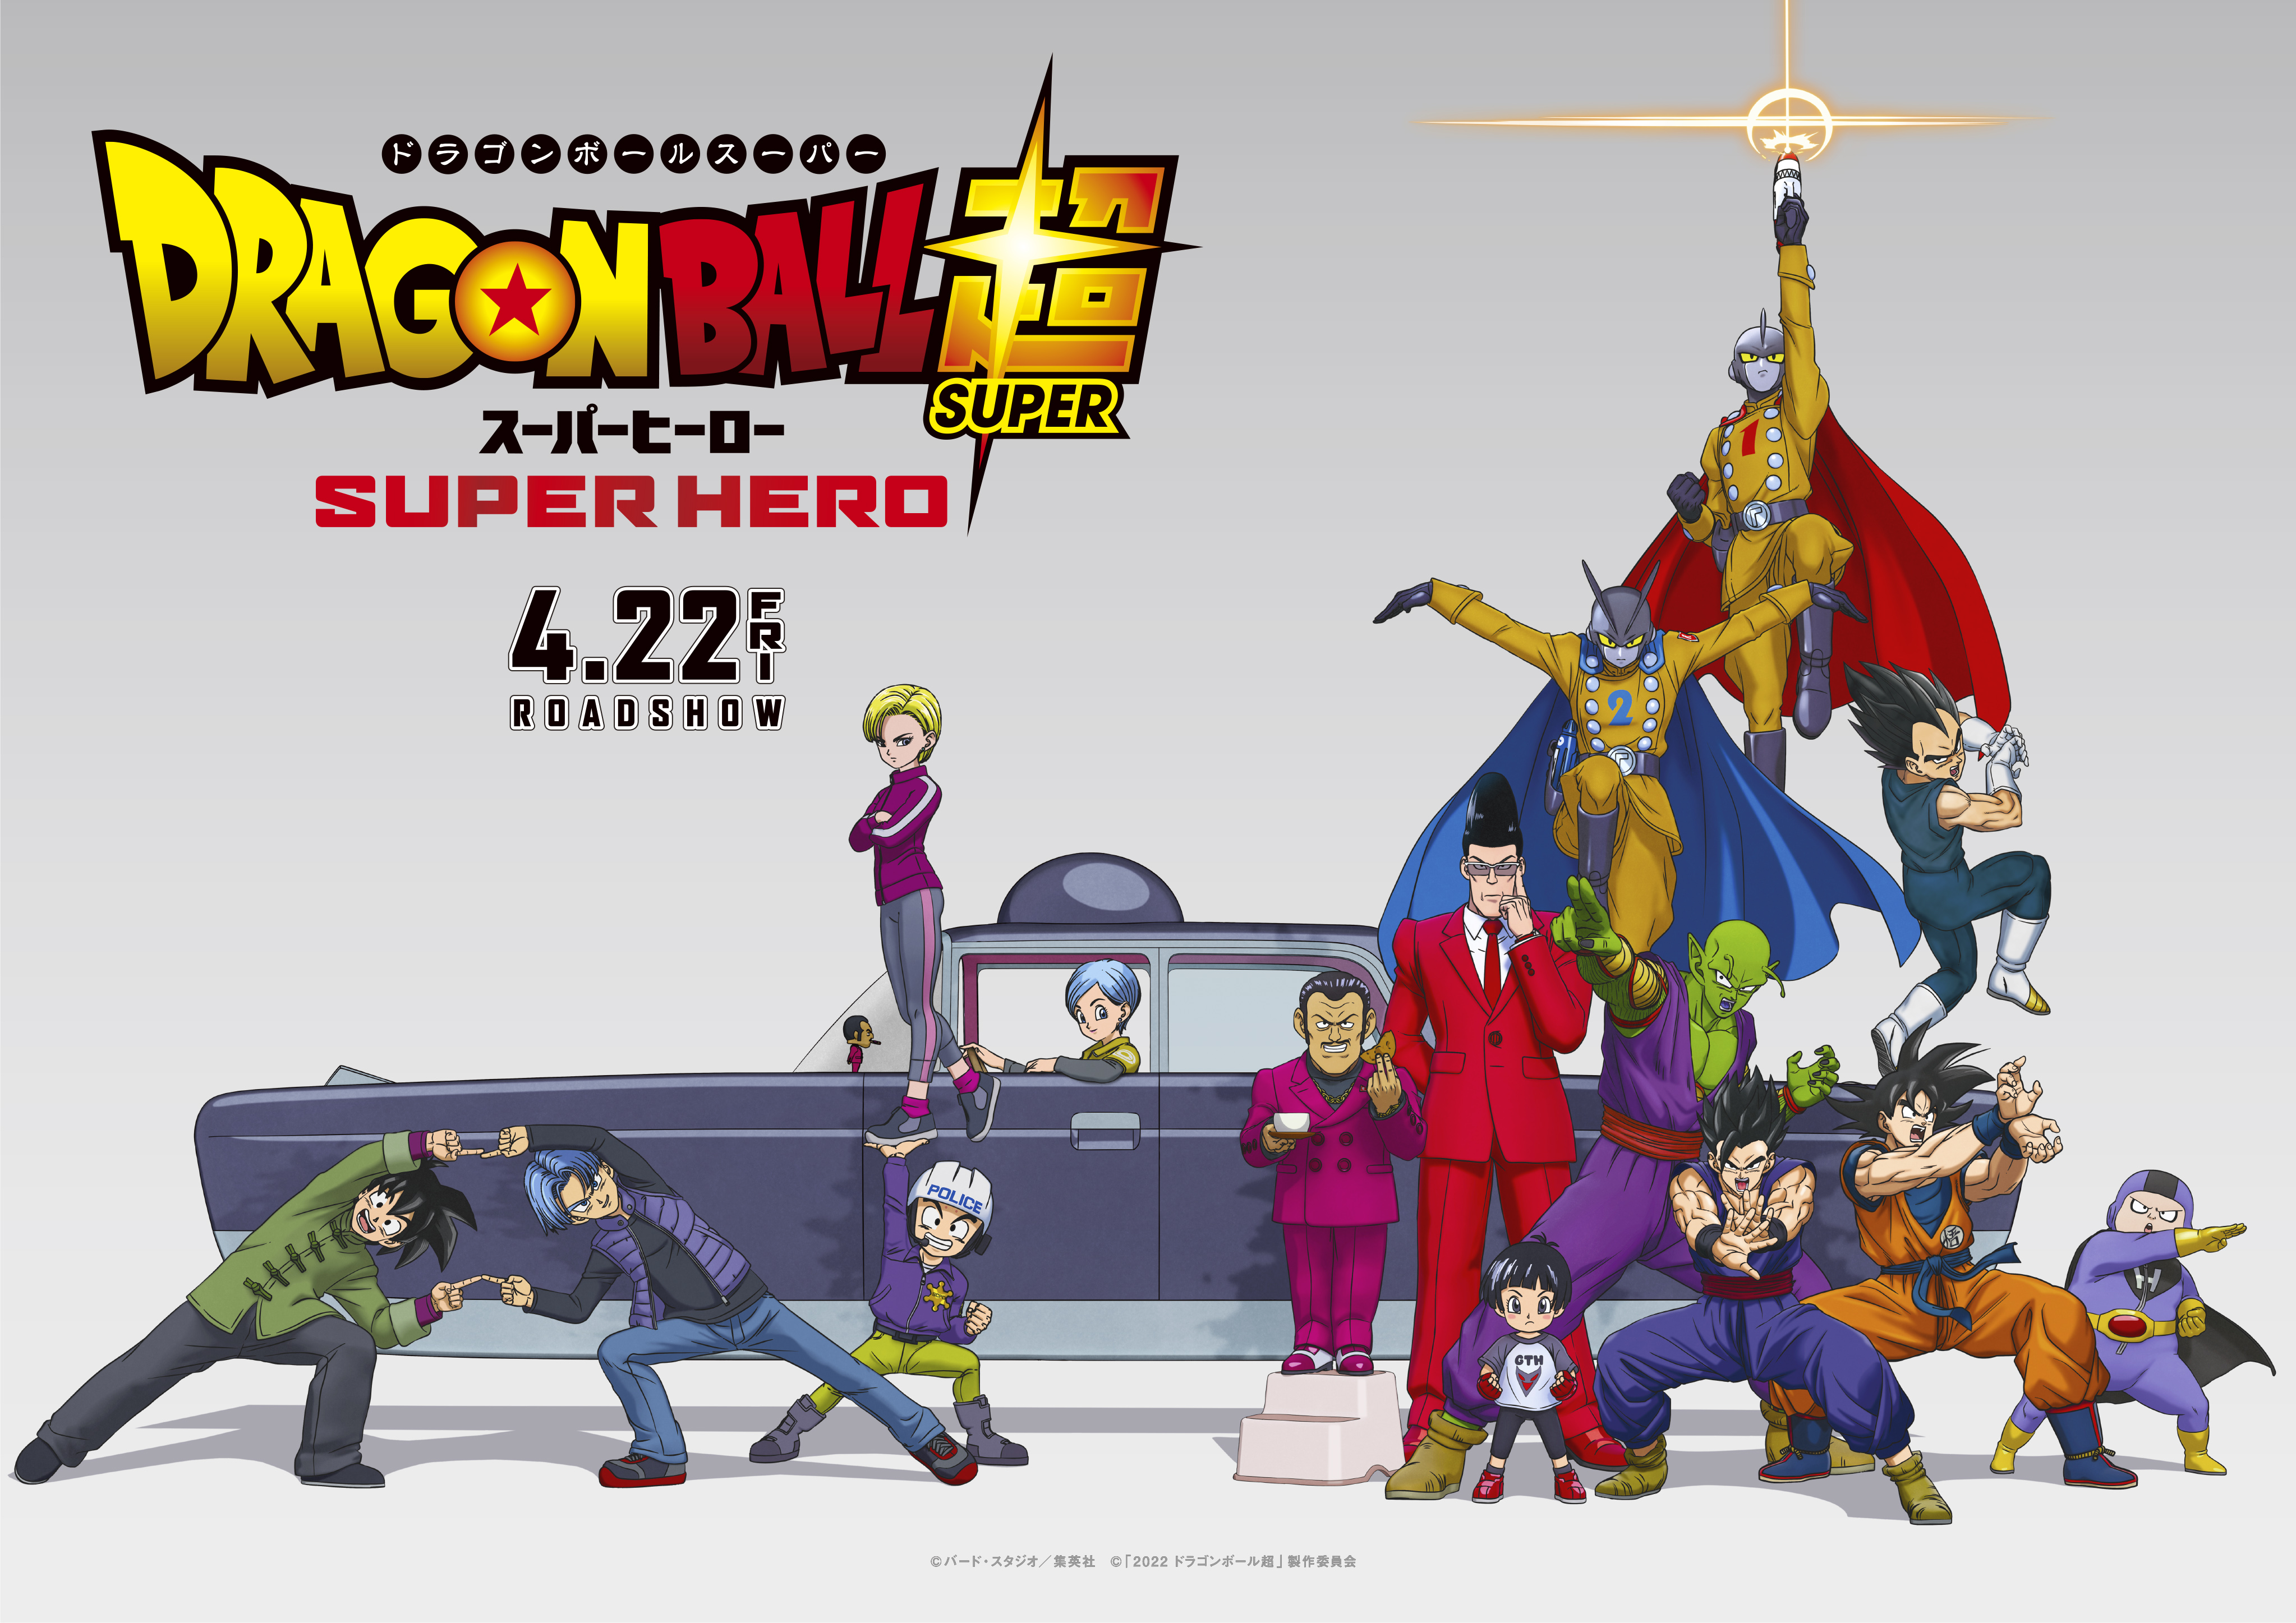 Stream Super Dragon Ball Heroes: Super Saiyan God Trunks Event Phase 2  Extended OST, DBZ Dokkan Battle by Yamcha